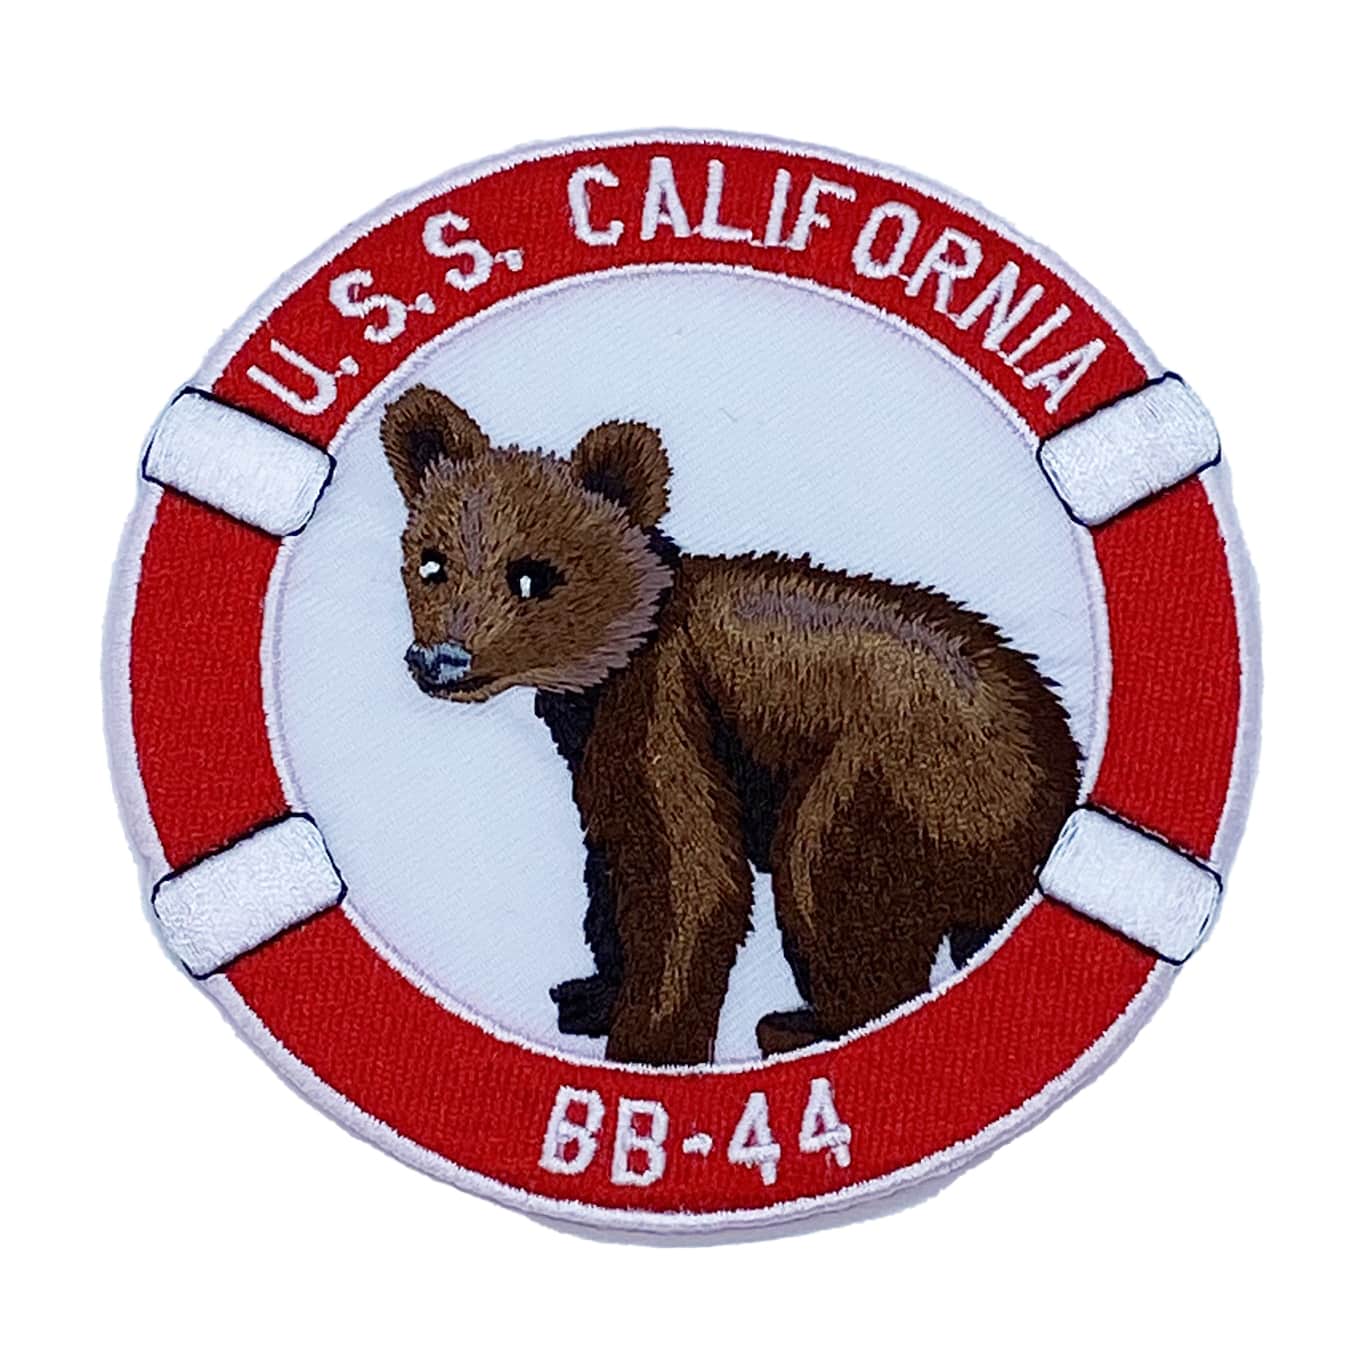 USS California BB-44 Patch - Plastic Backing